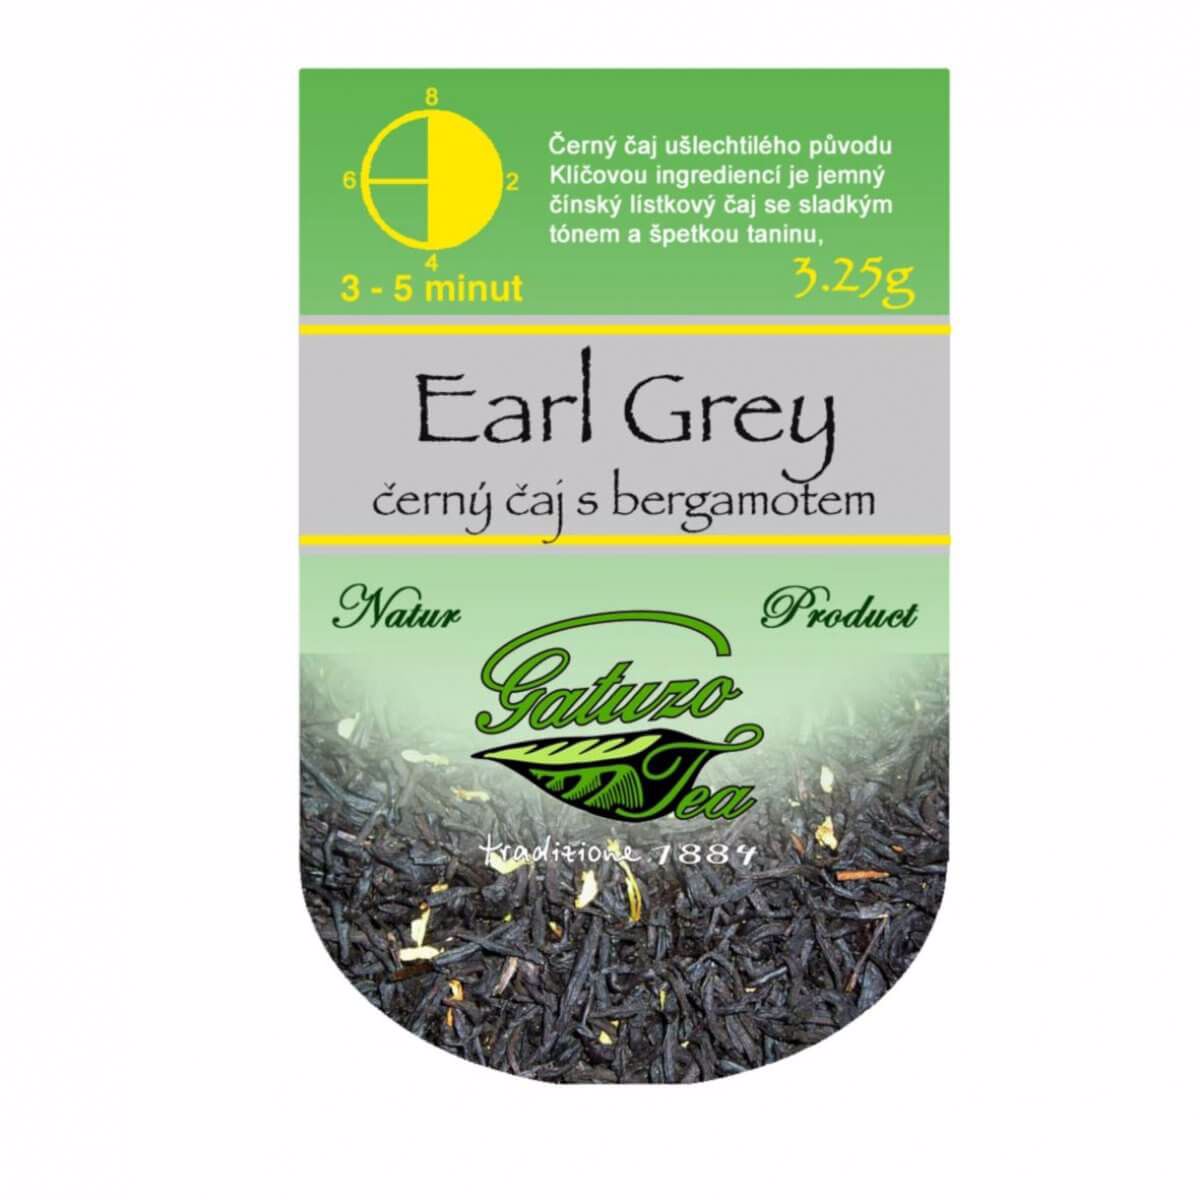 Čaj Gatuzo Tea - Earl Grey